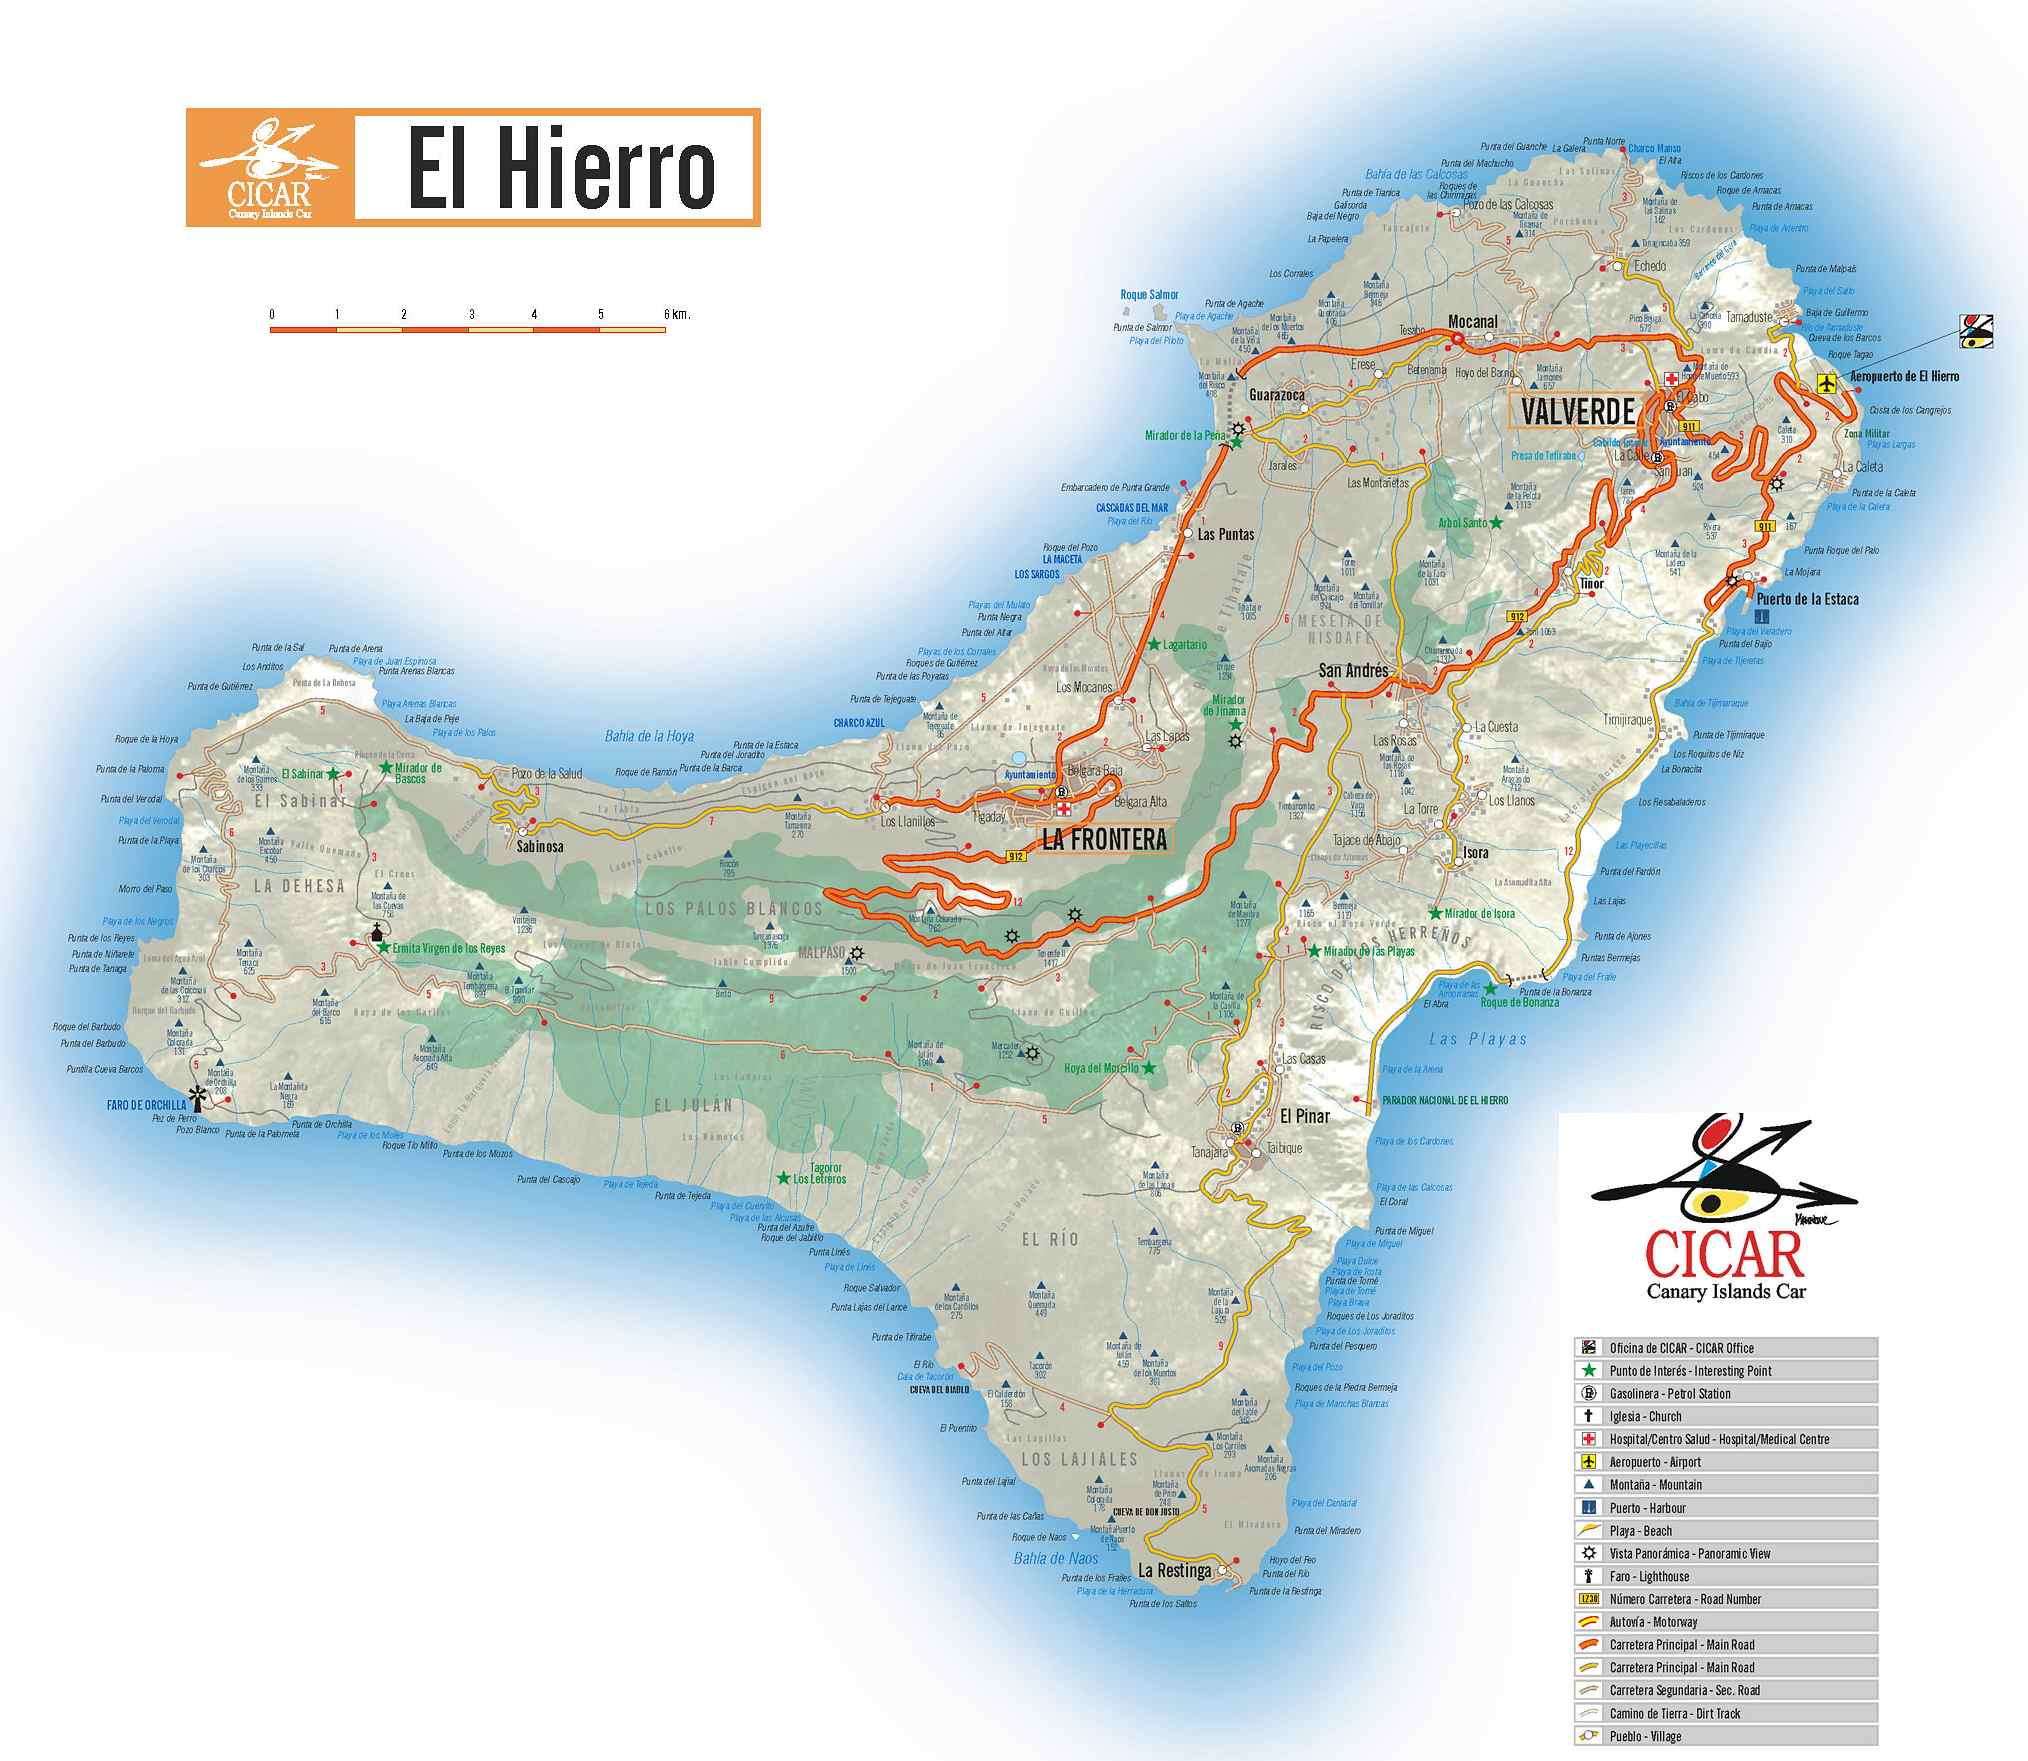 El Hierro Karte - grosse detaillierte Karte von El Hierro